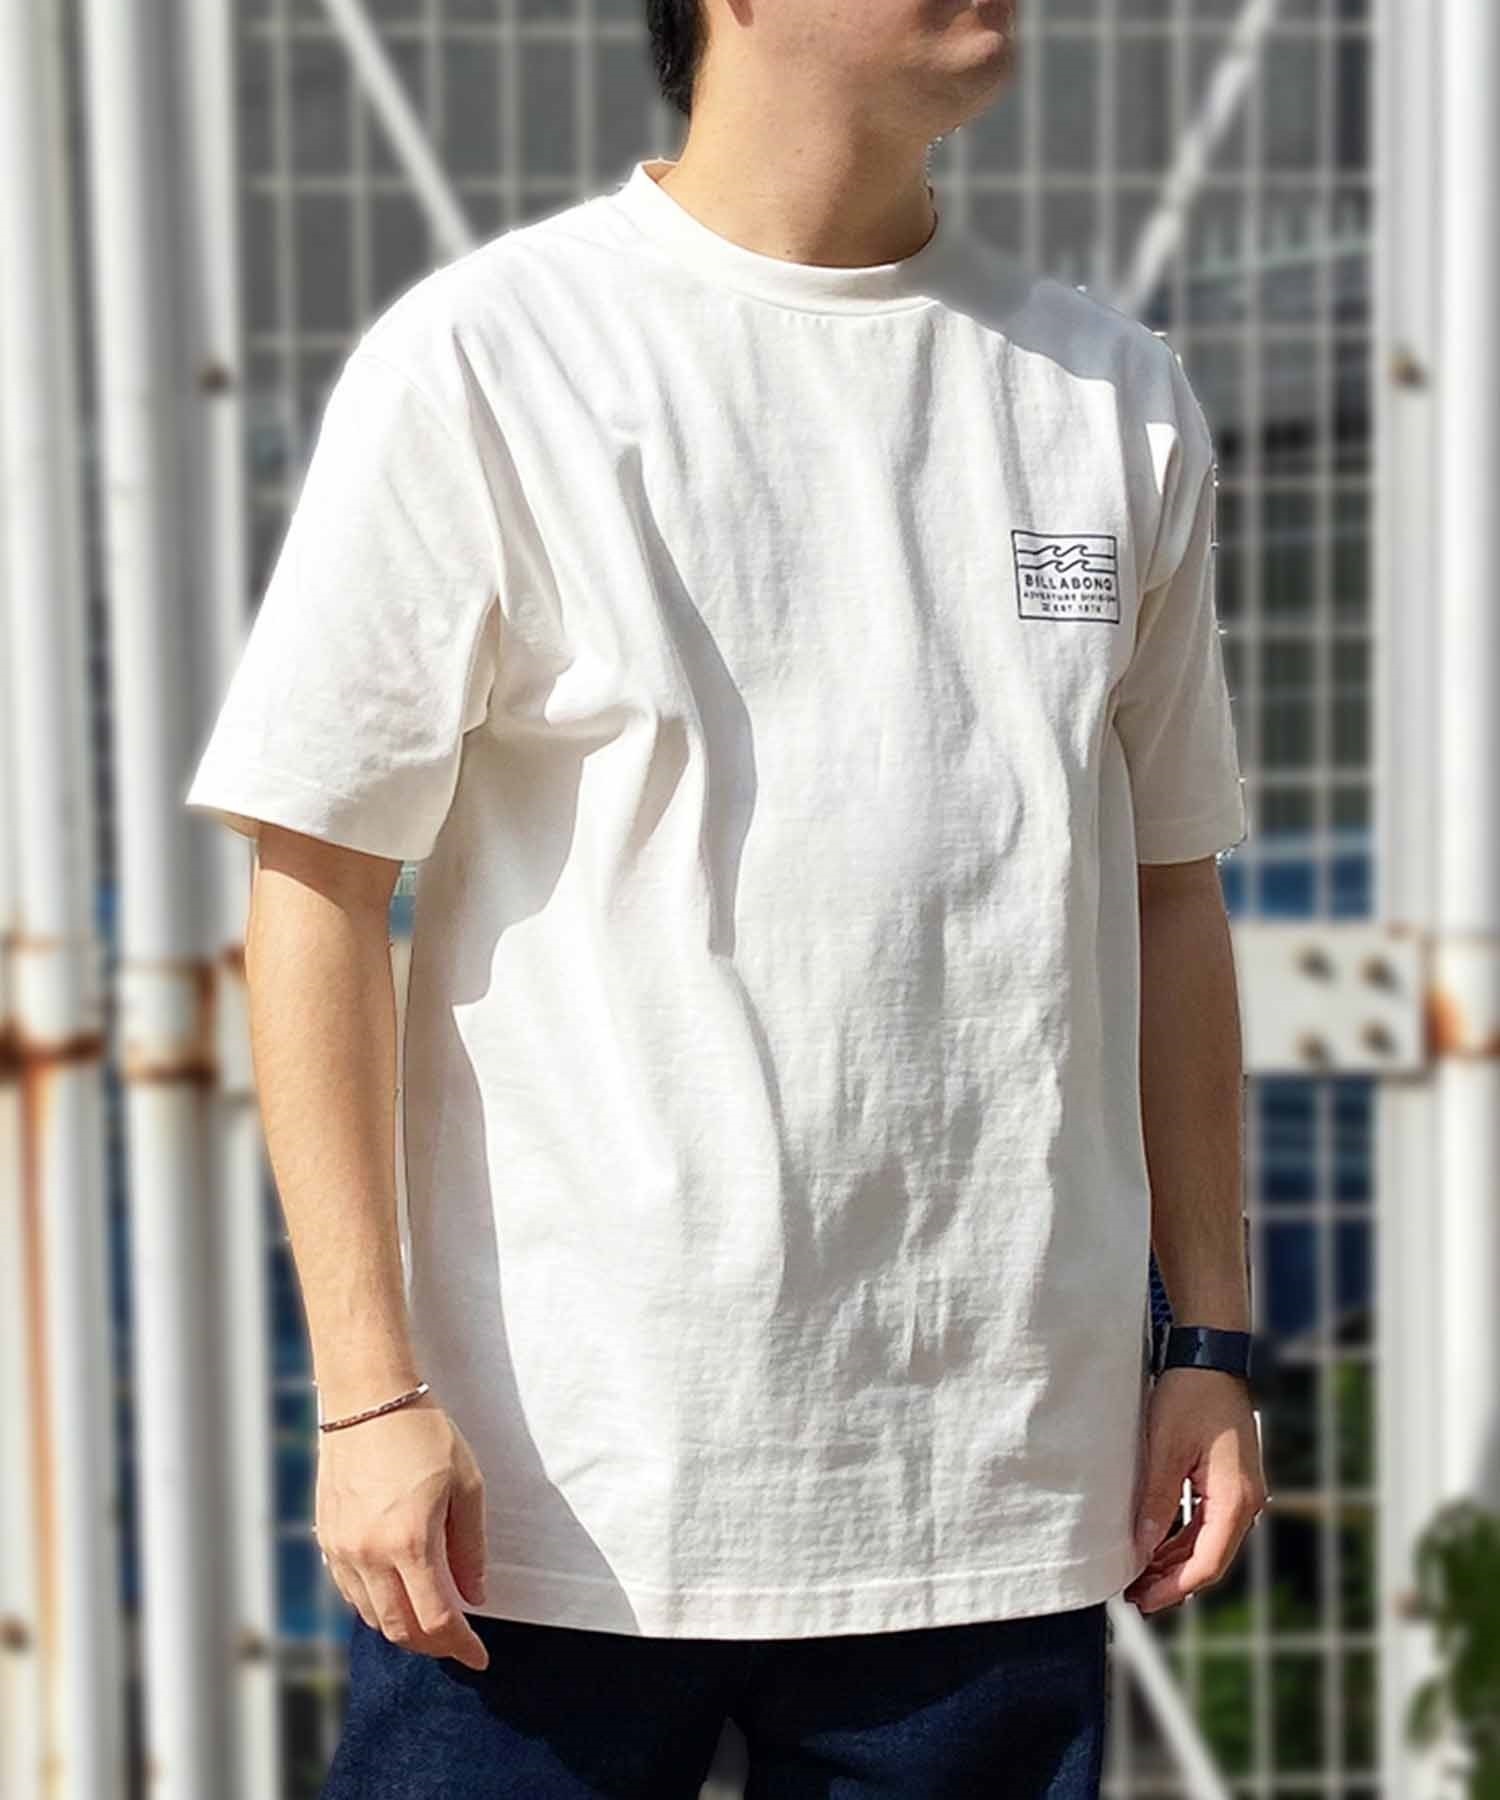 BILLABONG ビラボン メンズ バックプリントTシャツ ロゴT 半袖 BE011-214(CRM-M)